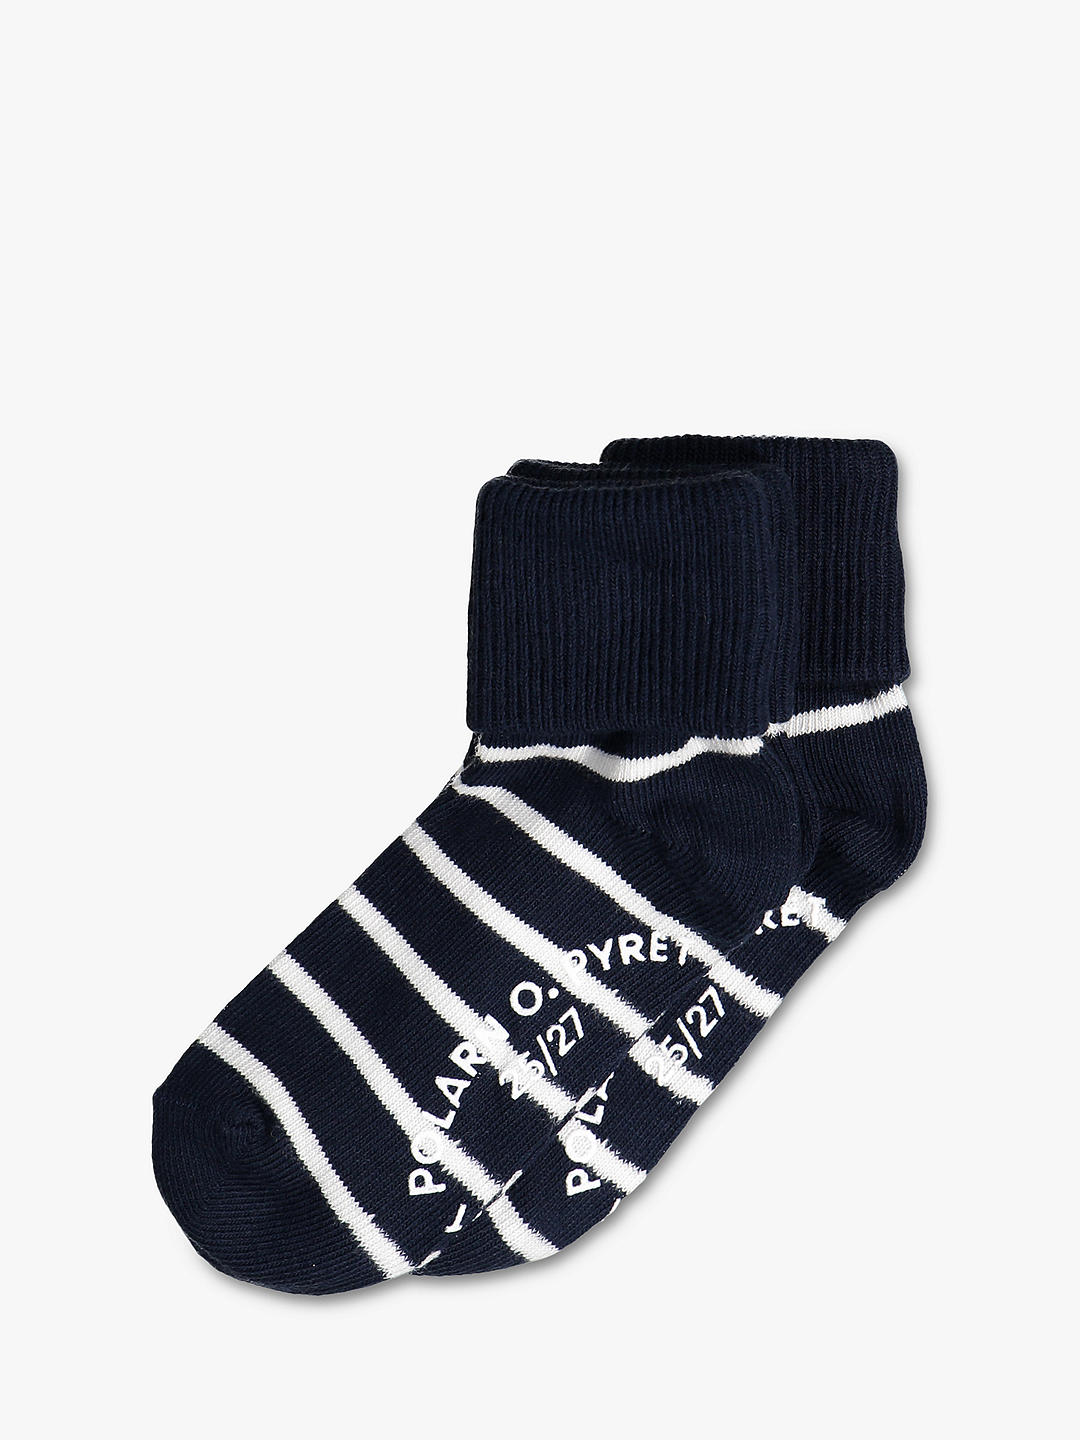 Polarn O. Pyret Kids' Anti-Slip Stripe Socks, Pack of 2, Blue